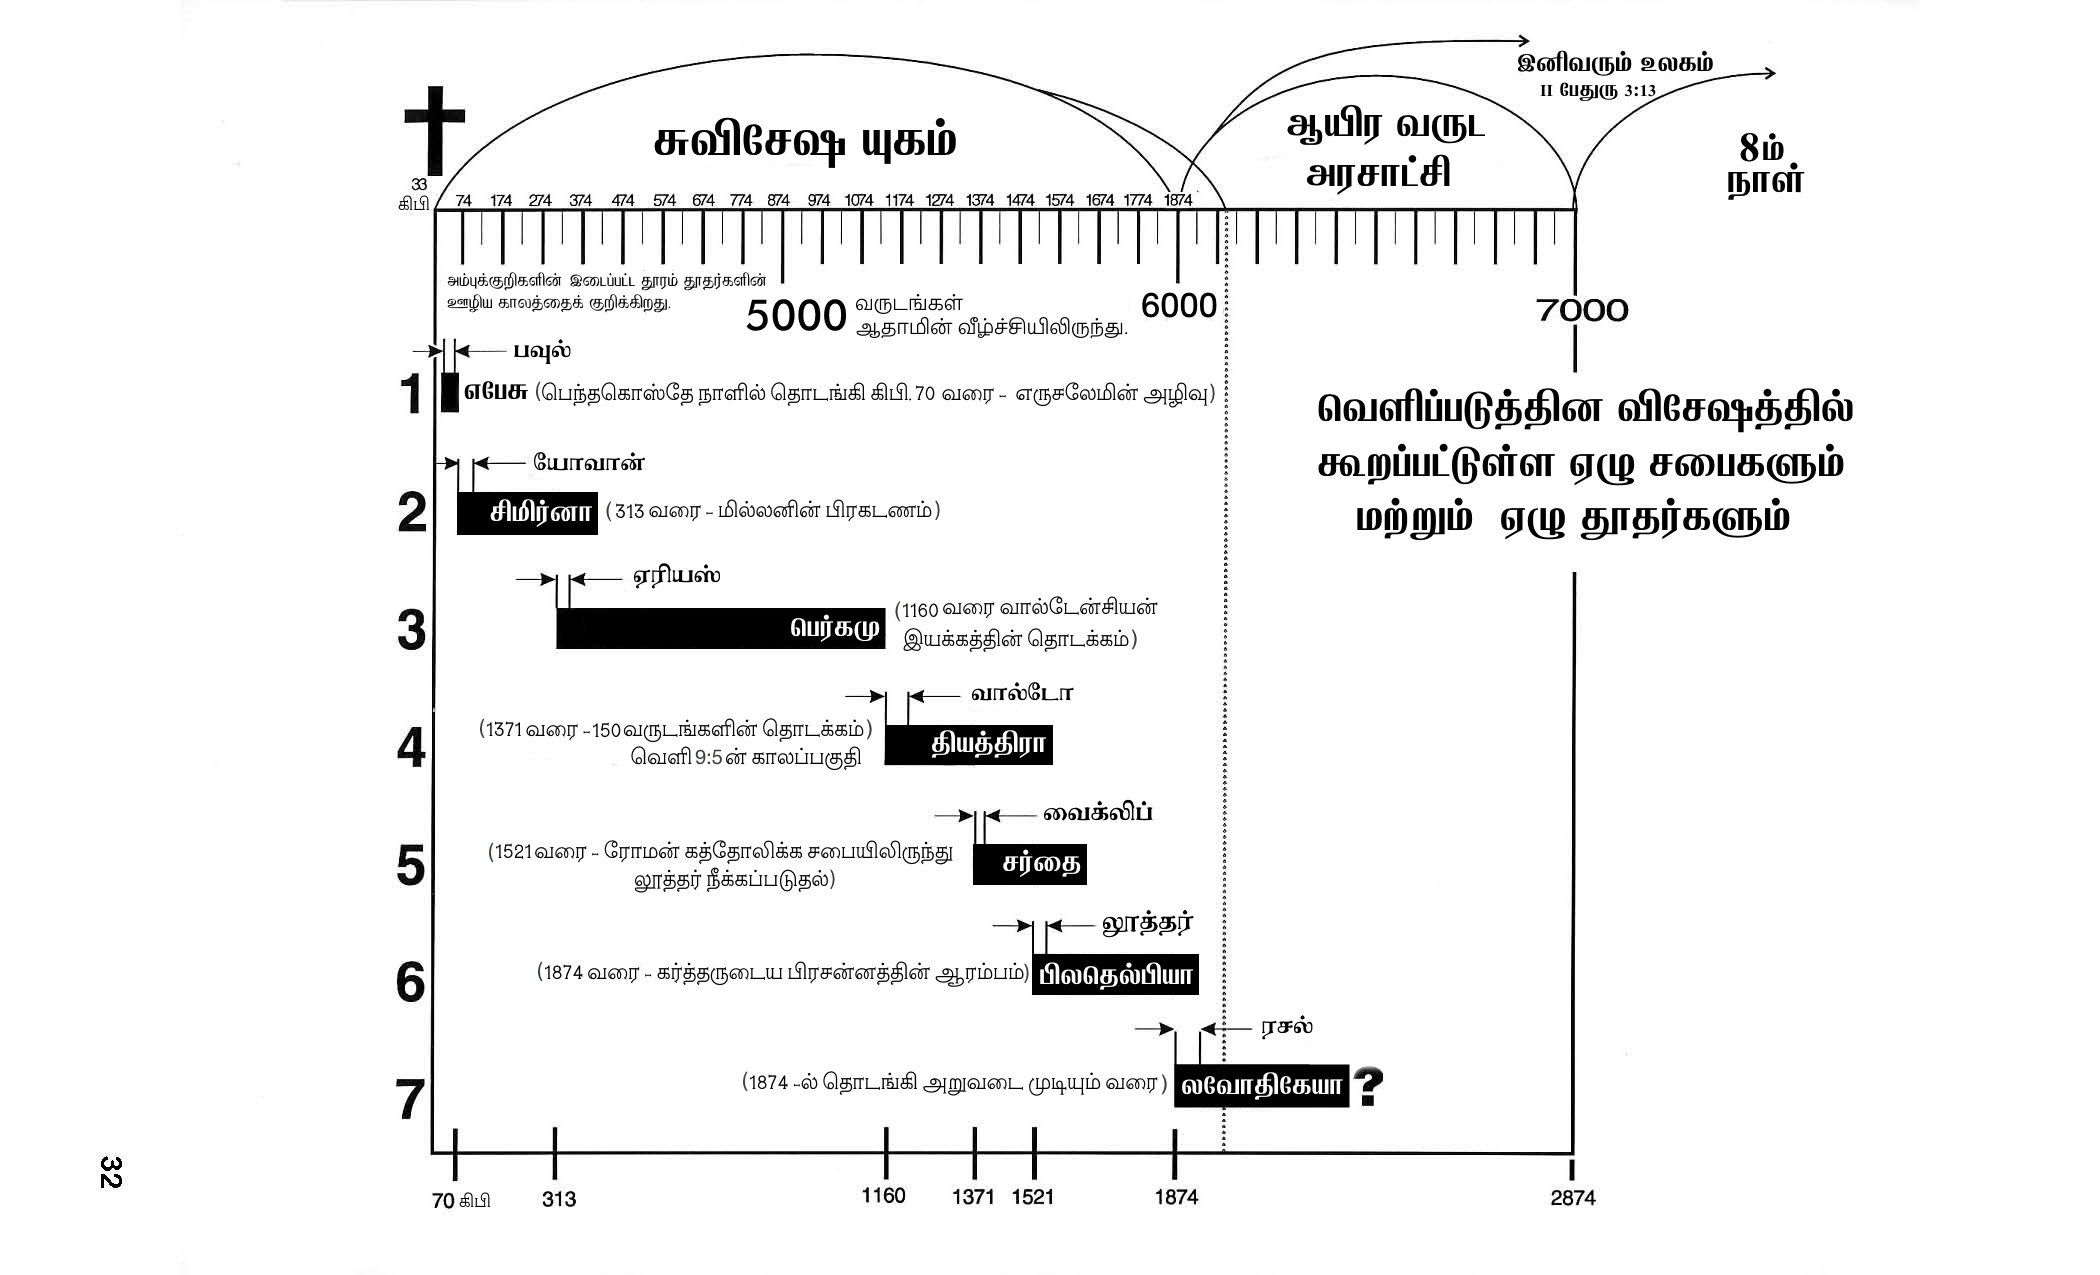 christian stories in tamil pdf